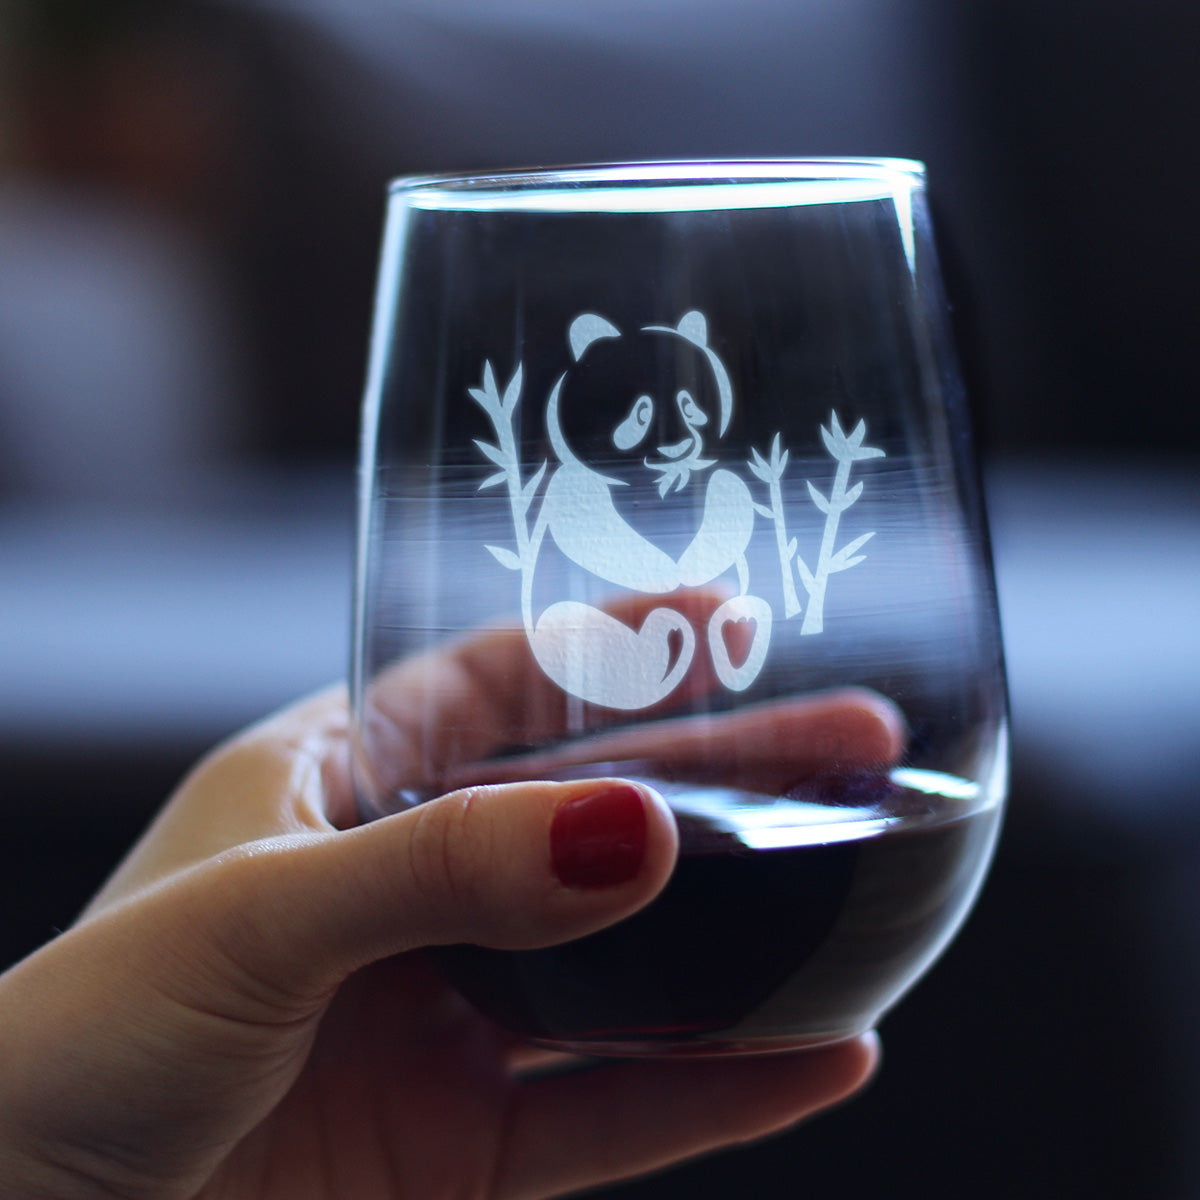 Panda Stemless Wine Glass - Cute Panda Themed Decor and Gifts for Panda Bears - Large 17 Oz Glasses